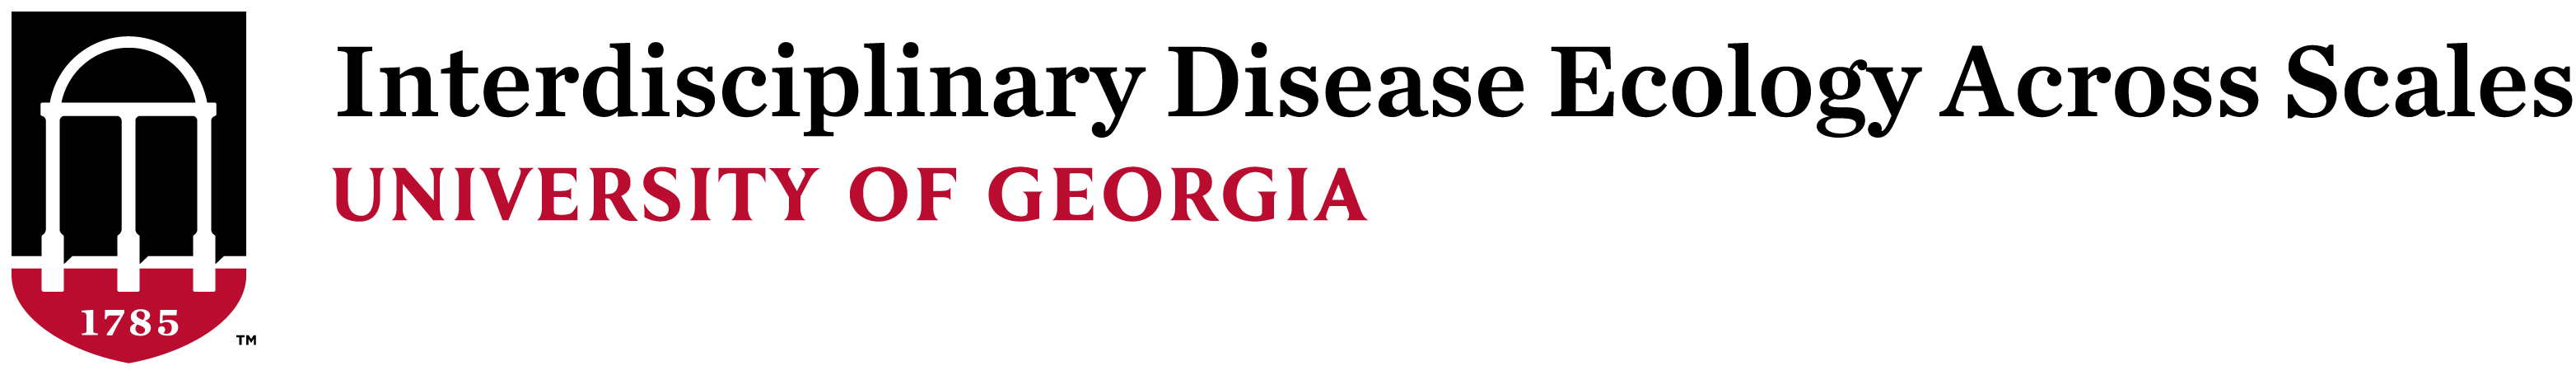 logo: Interdisciplinary Disease Ecology Across Scales, University of Georgia